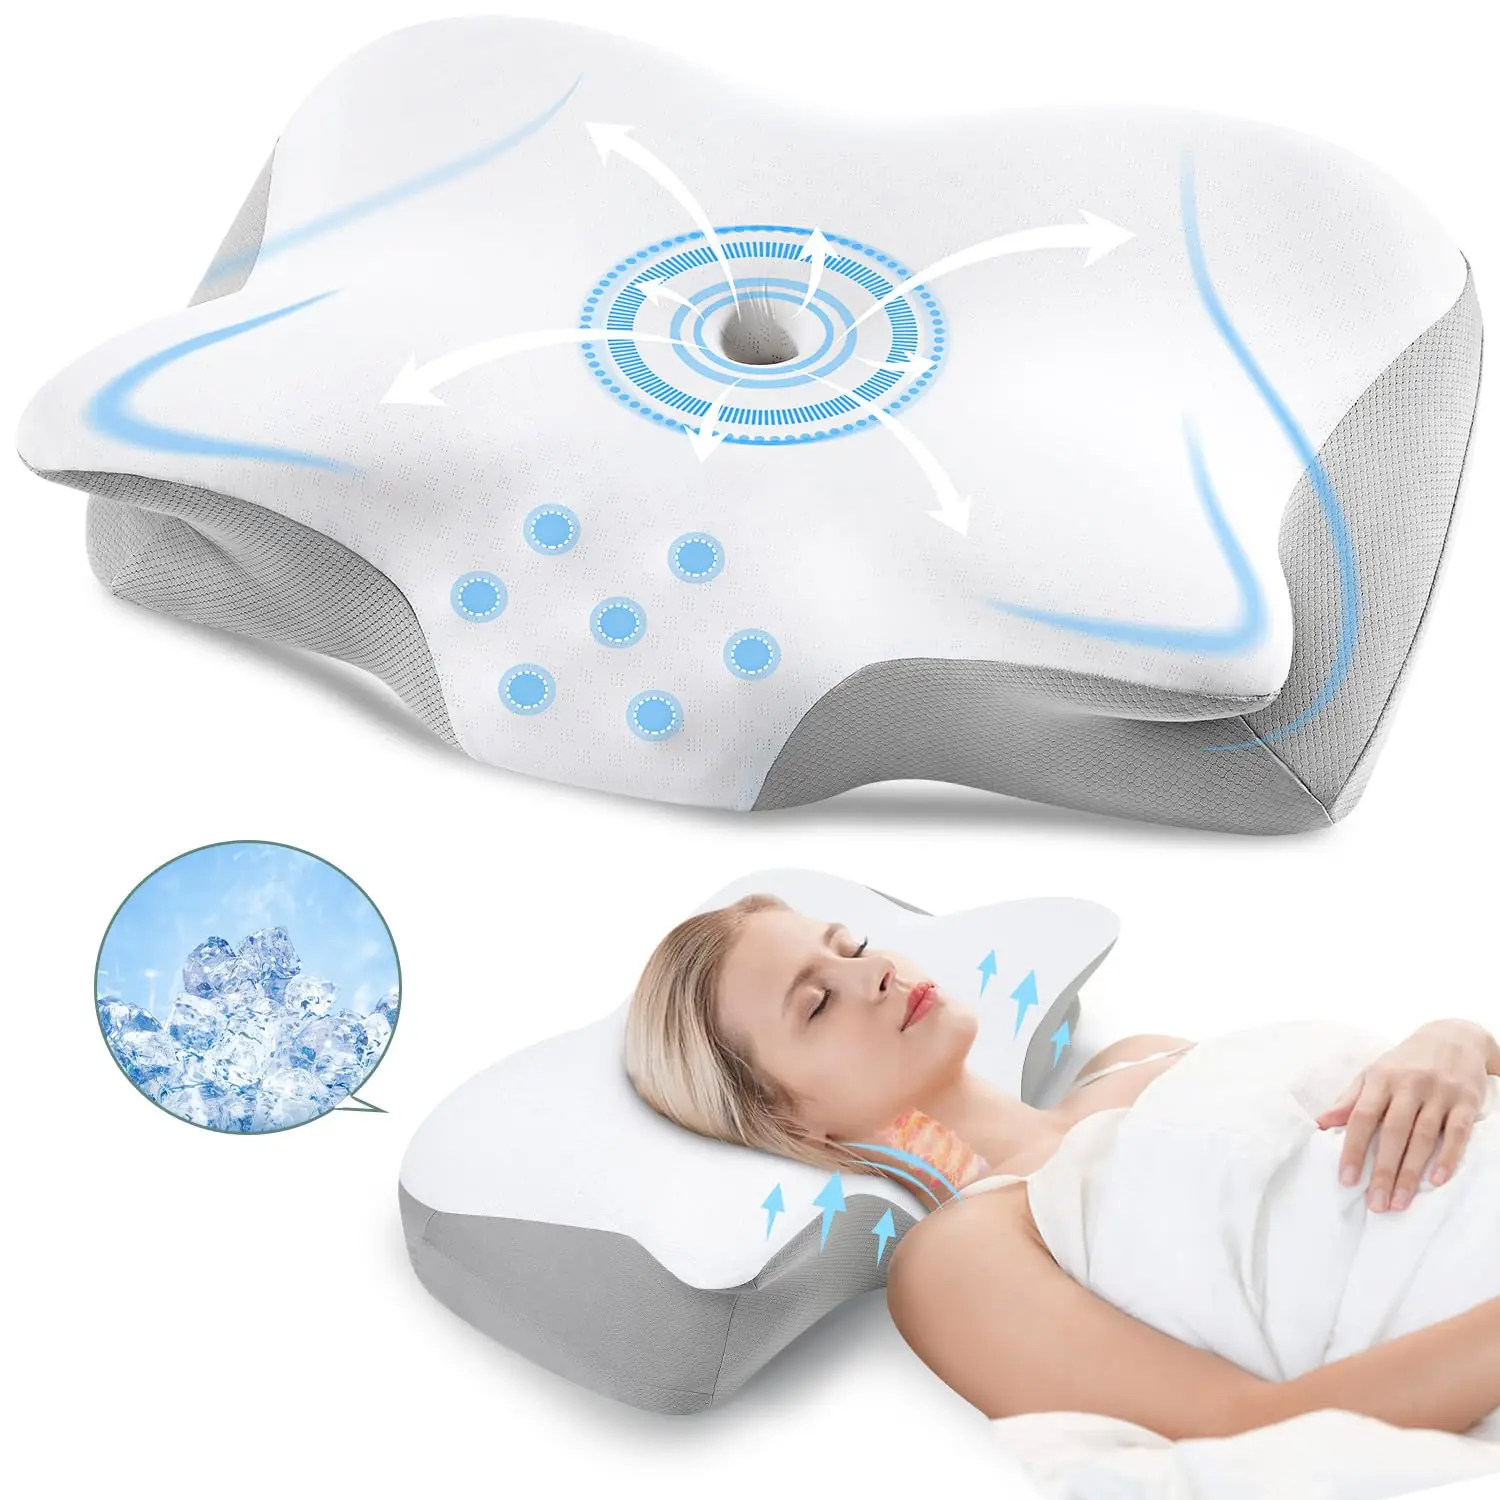 Hot Nature Ergonomic Cervical Pillow For Sleeping Orthopedic Support ...